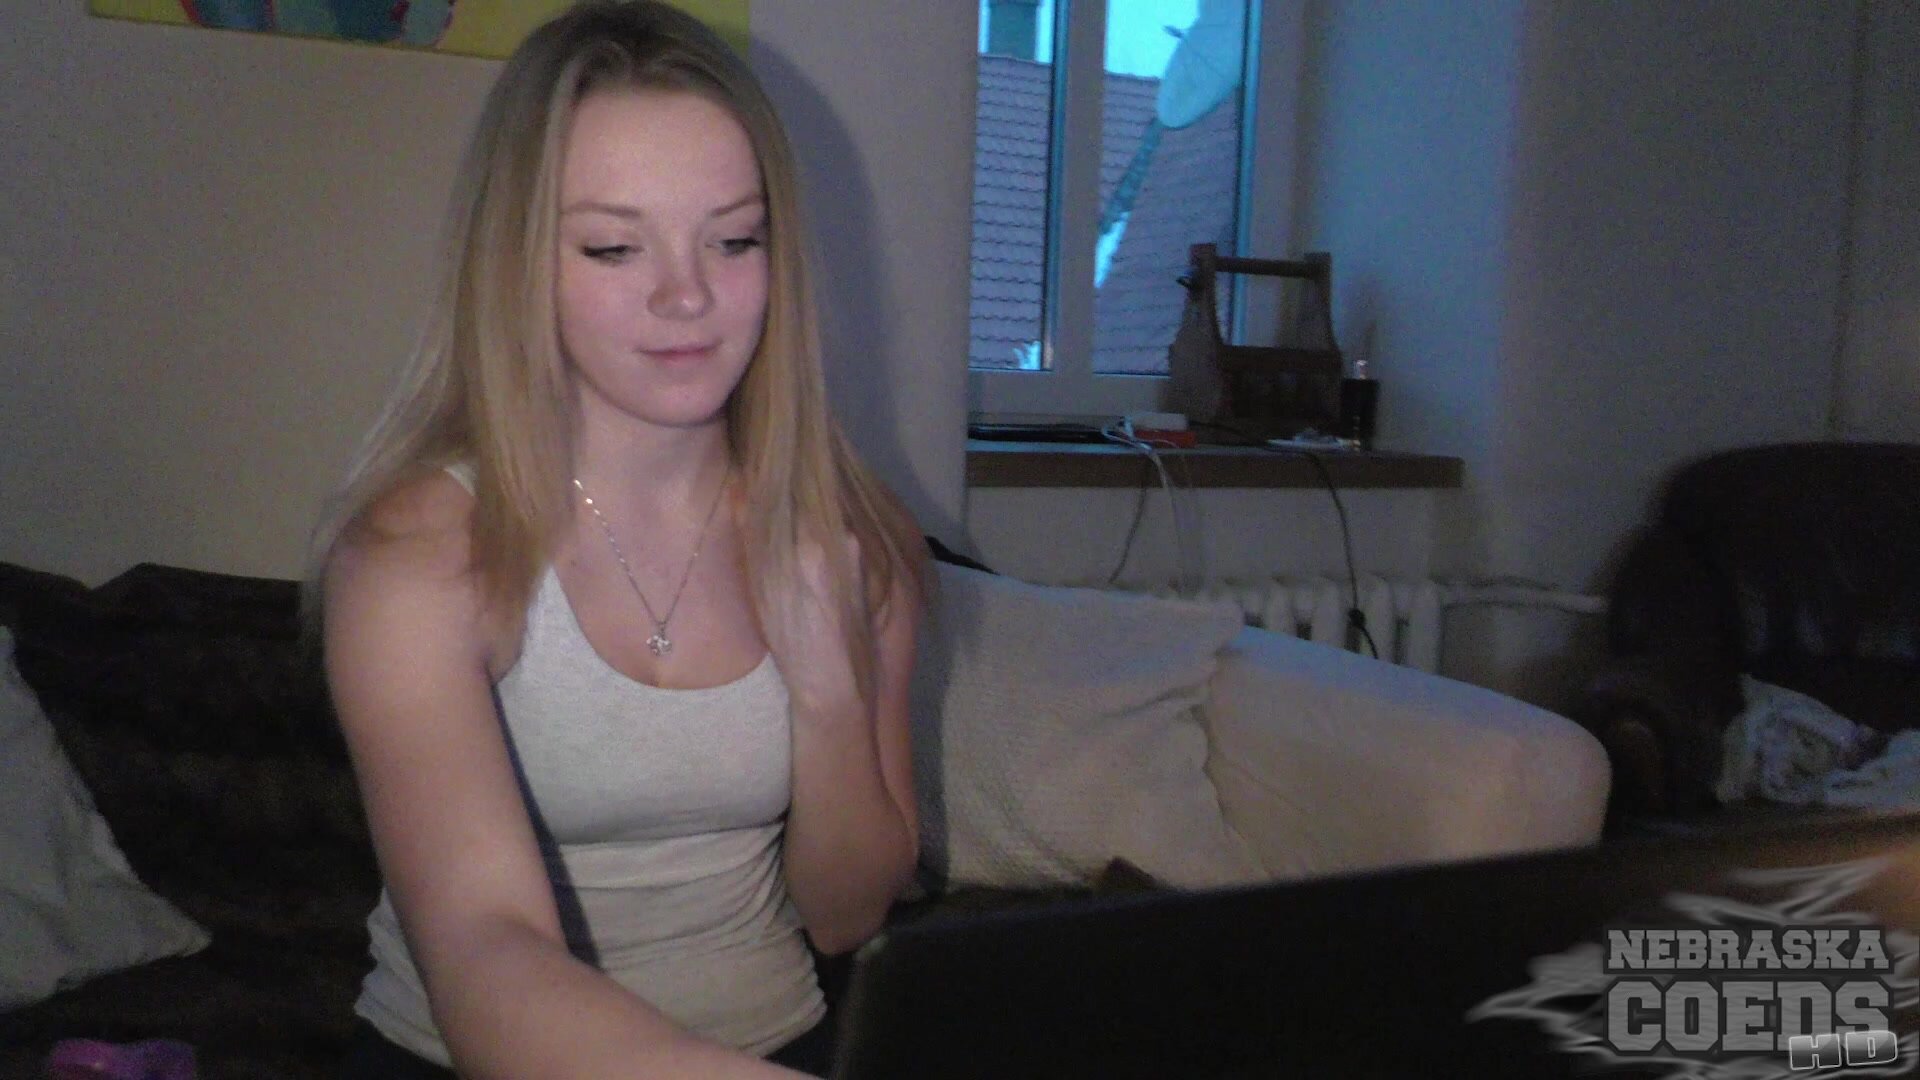 NebraskaCoeds - Beautiful Teen Tasha Doing A Webcam Sho